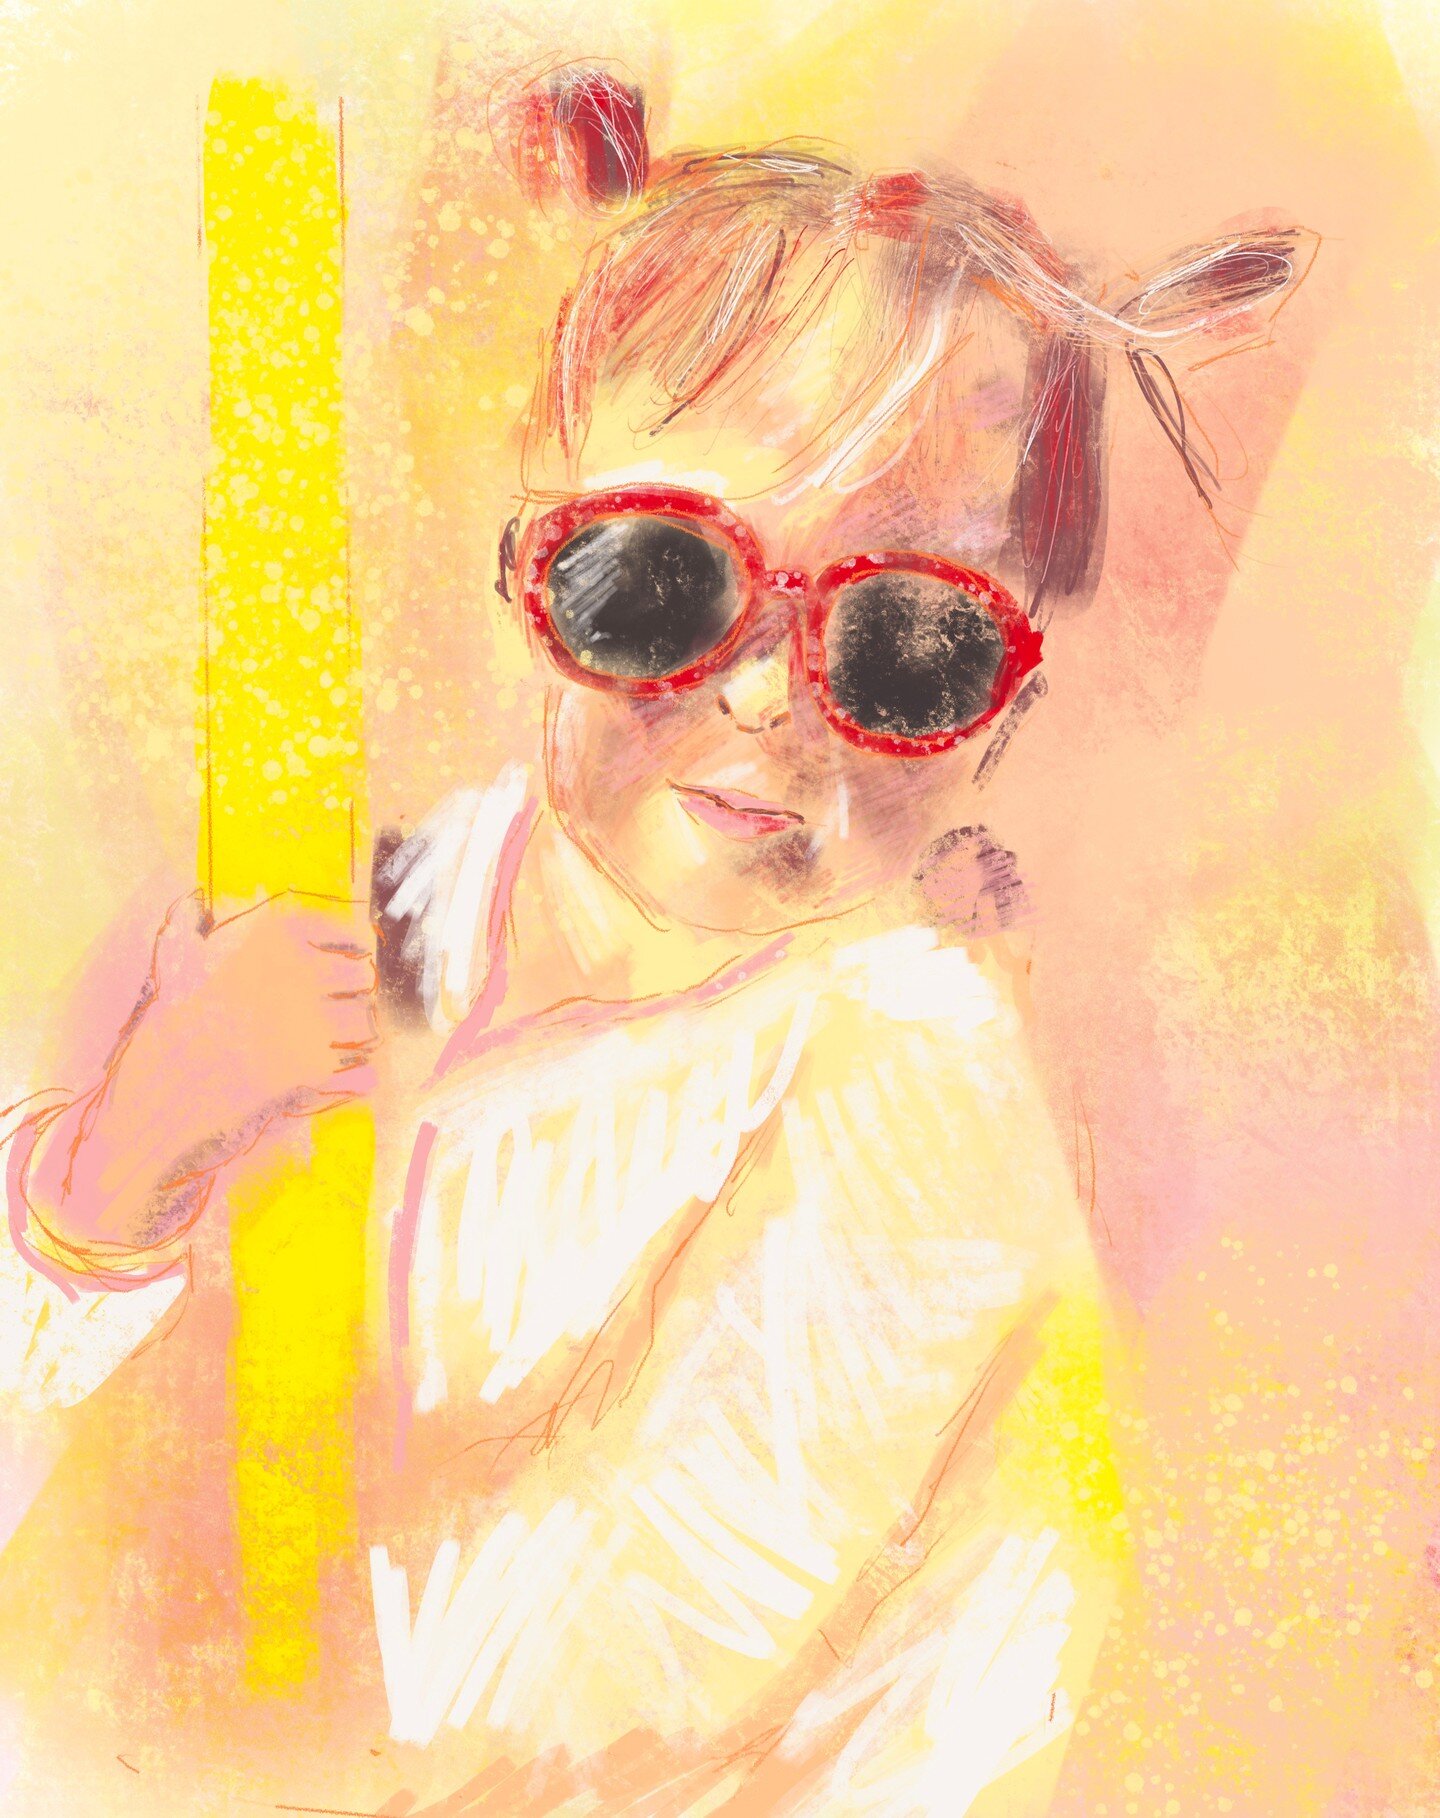 Sketchy Lily 🌤
.
#procreate #digitalportrait #sktchy #artwork #kidportrait